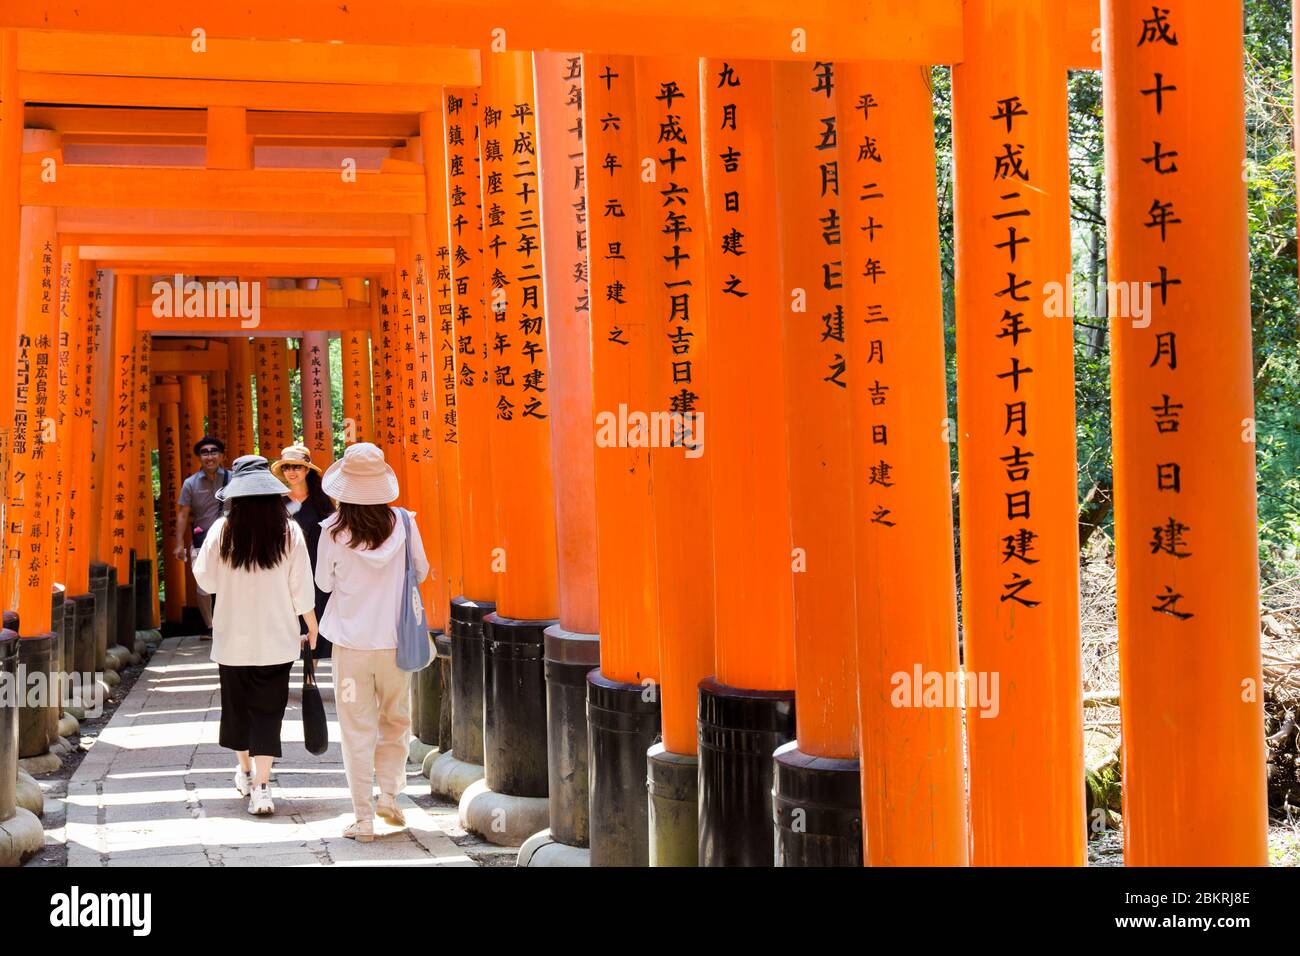 Japan, Honshu Island, Kansai Region, Kyoto, Fushimi ku district, Le Fushimi Inari taisha shrine, gate or torii Stock Photo